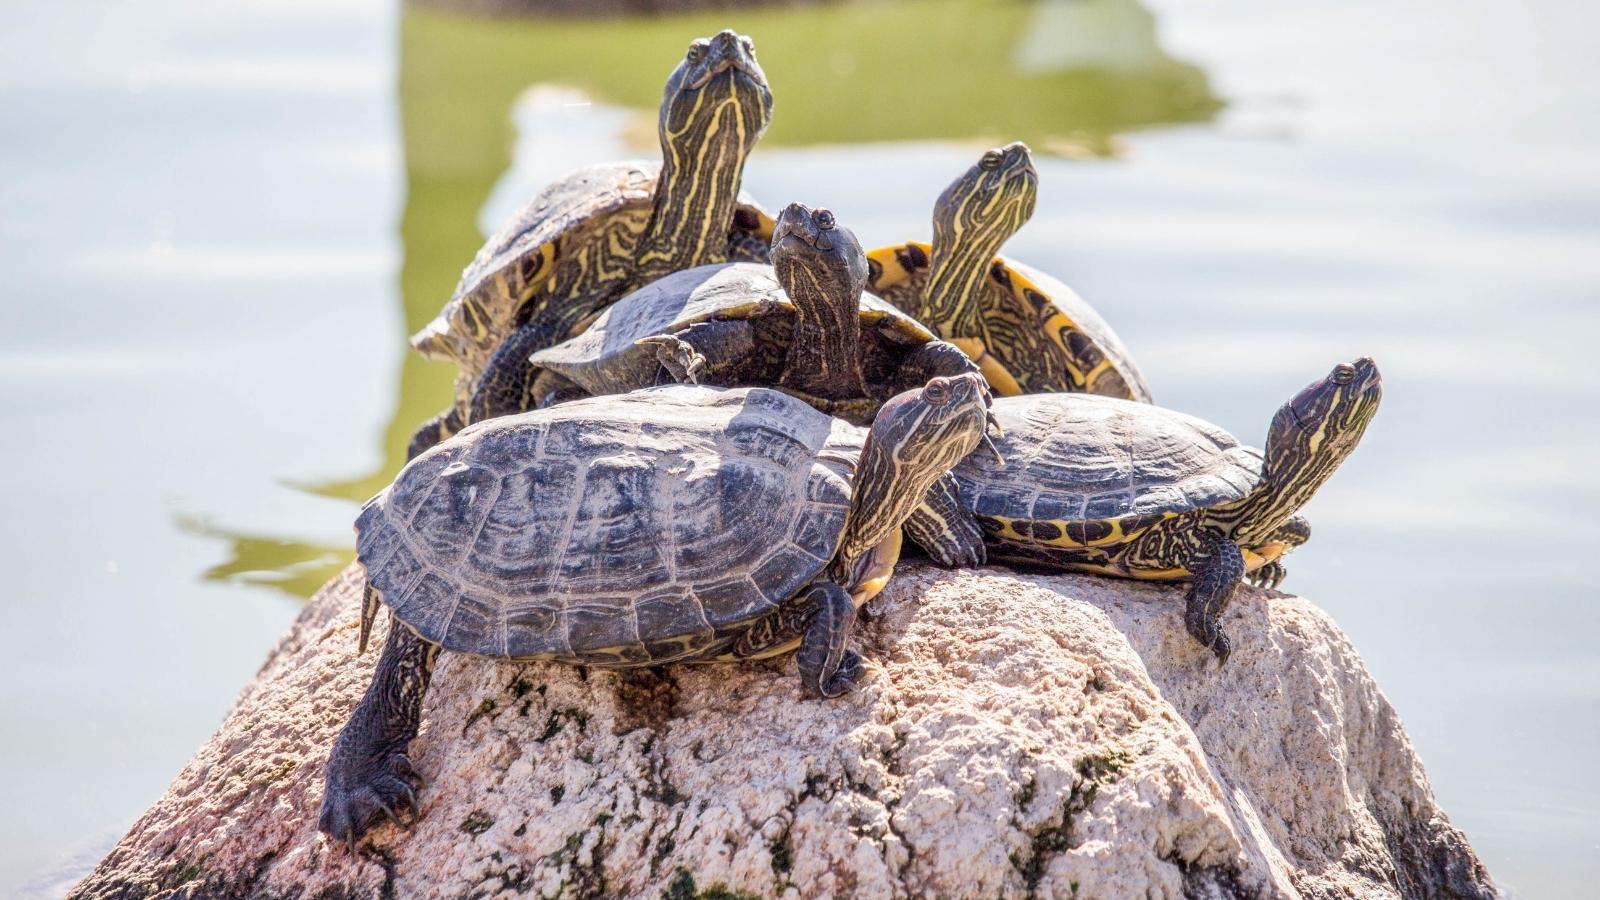 Giving birth to 4 turtles - Understanding your dreams - Kaya